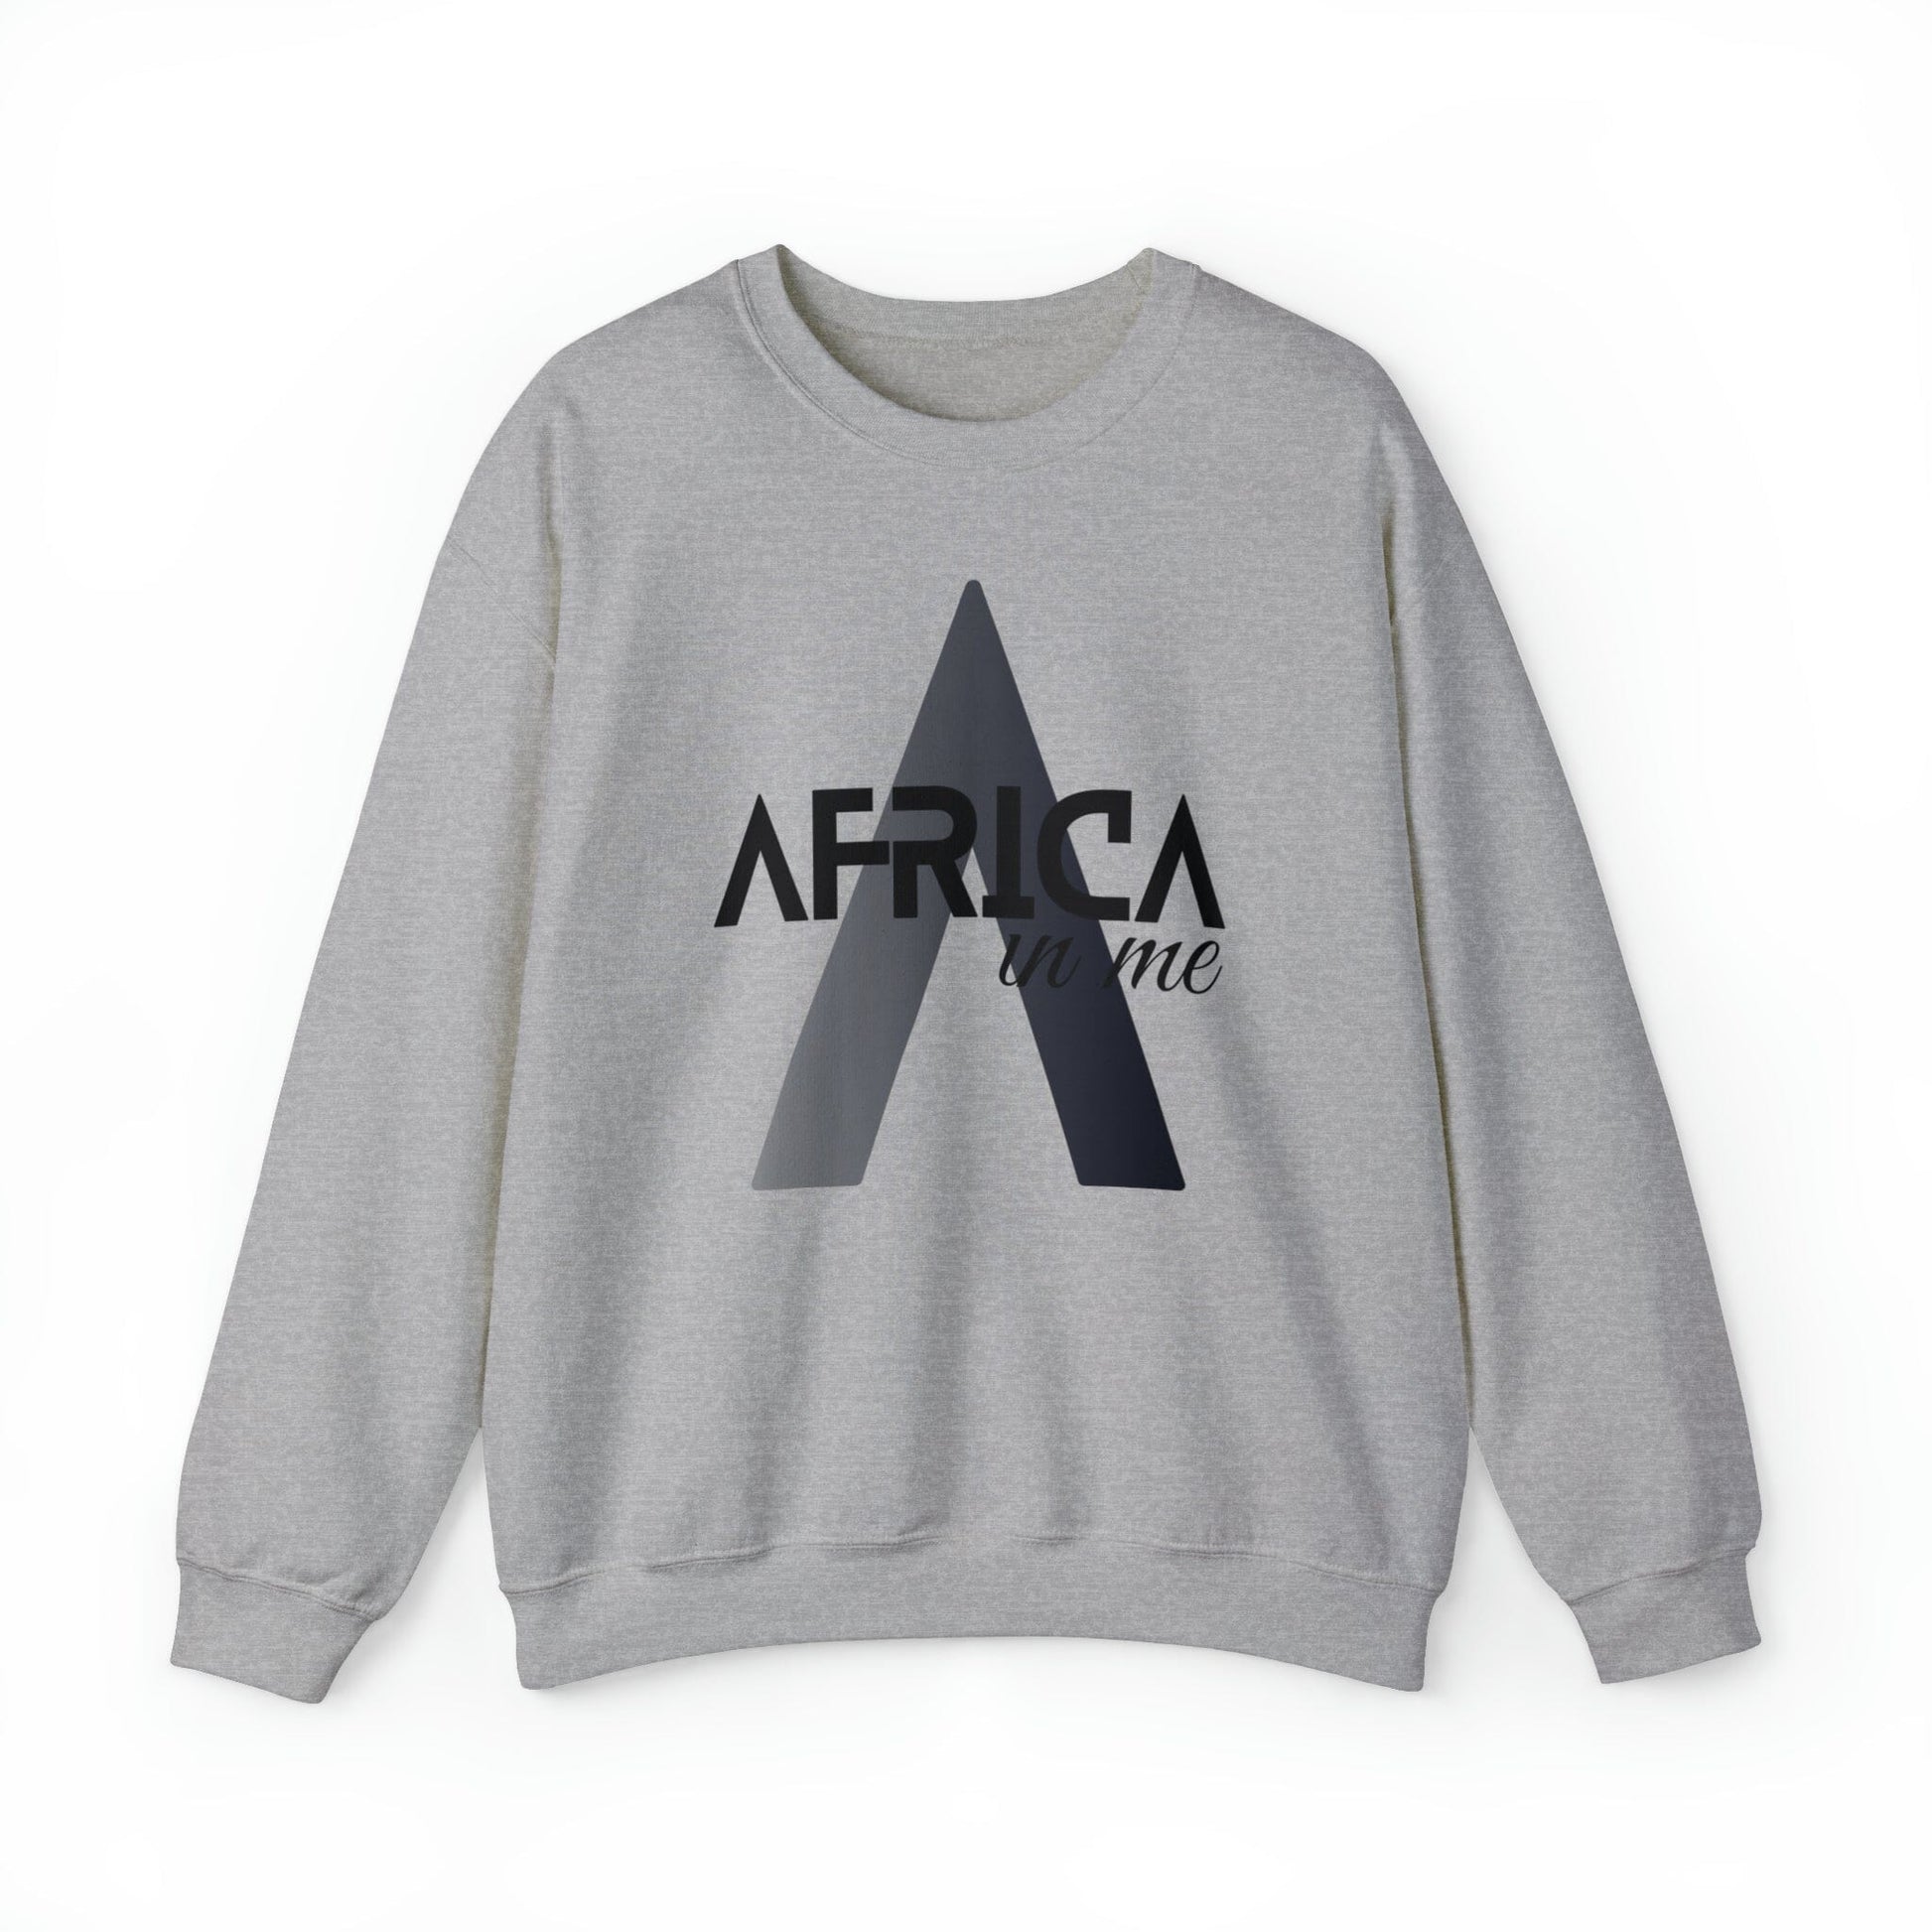 Black History Sweatshirts Superhero Africa in Me Sweatshirt  Sport Grey 